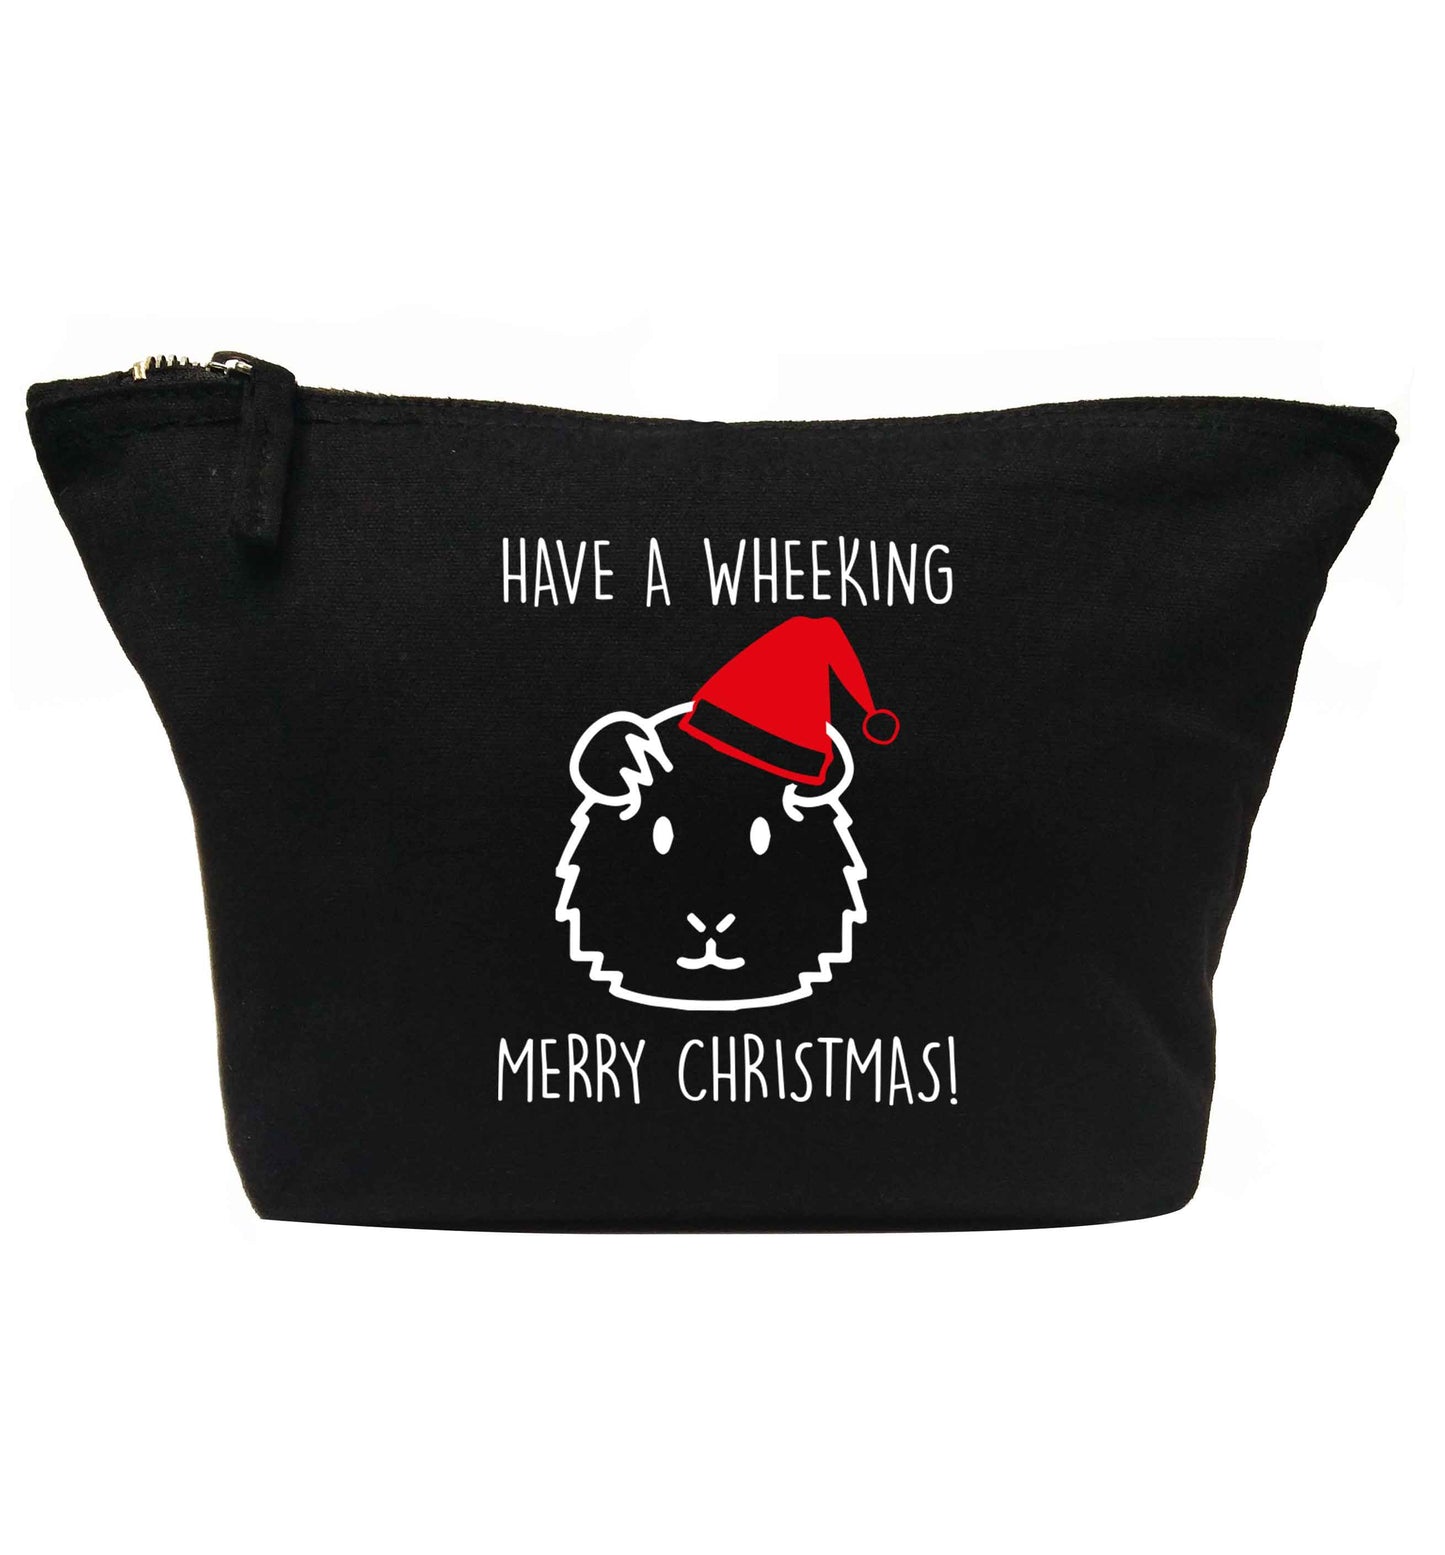 Have a wheeking merry Christmas | Makeup / wash bag